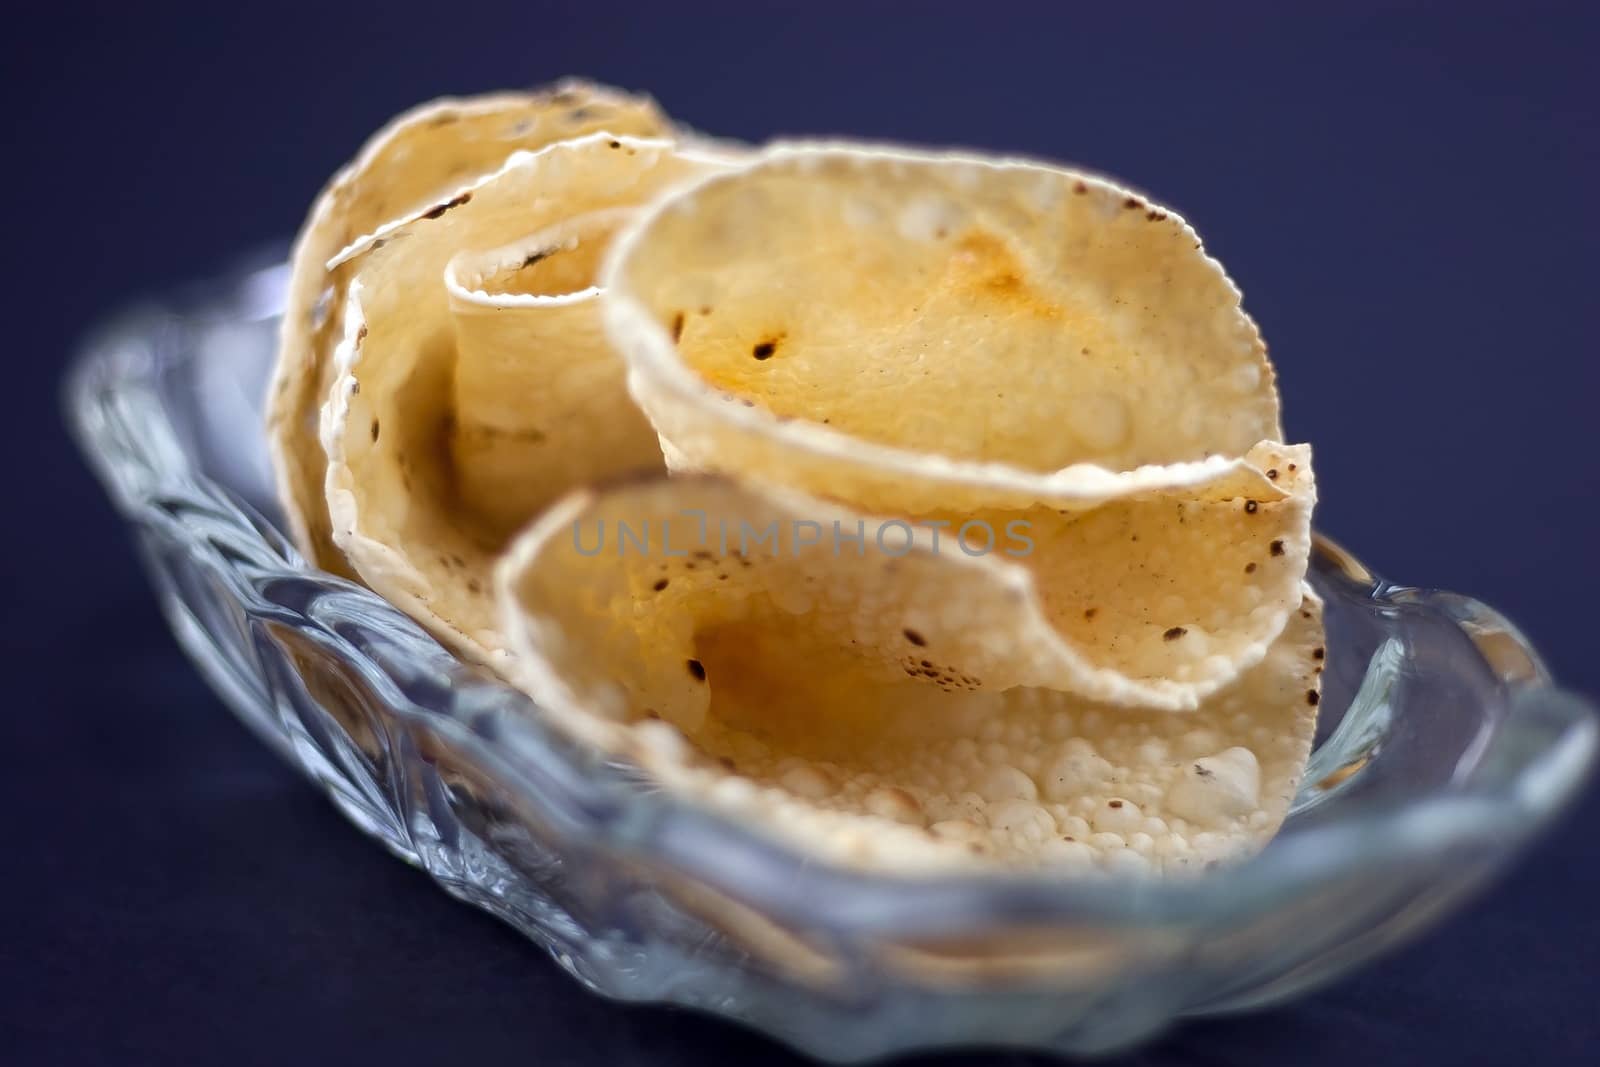 Indian Papadum crisps in a glass bowl by jaaske